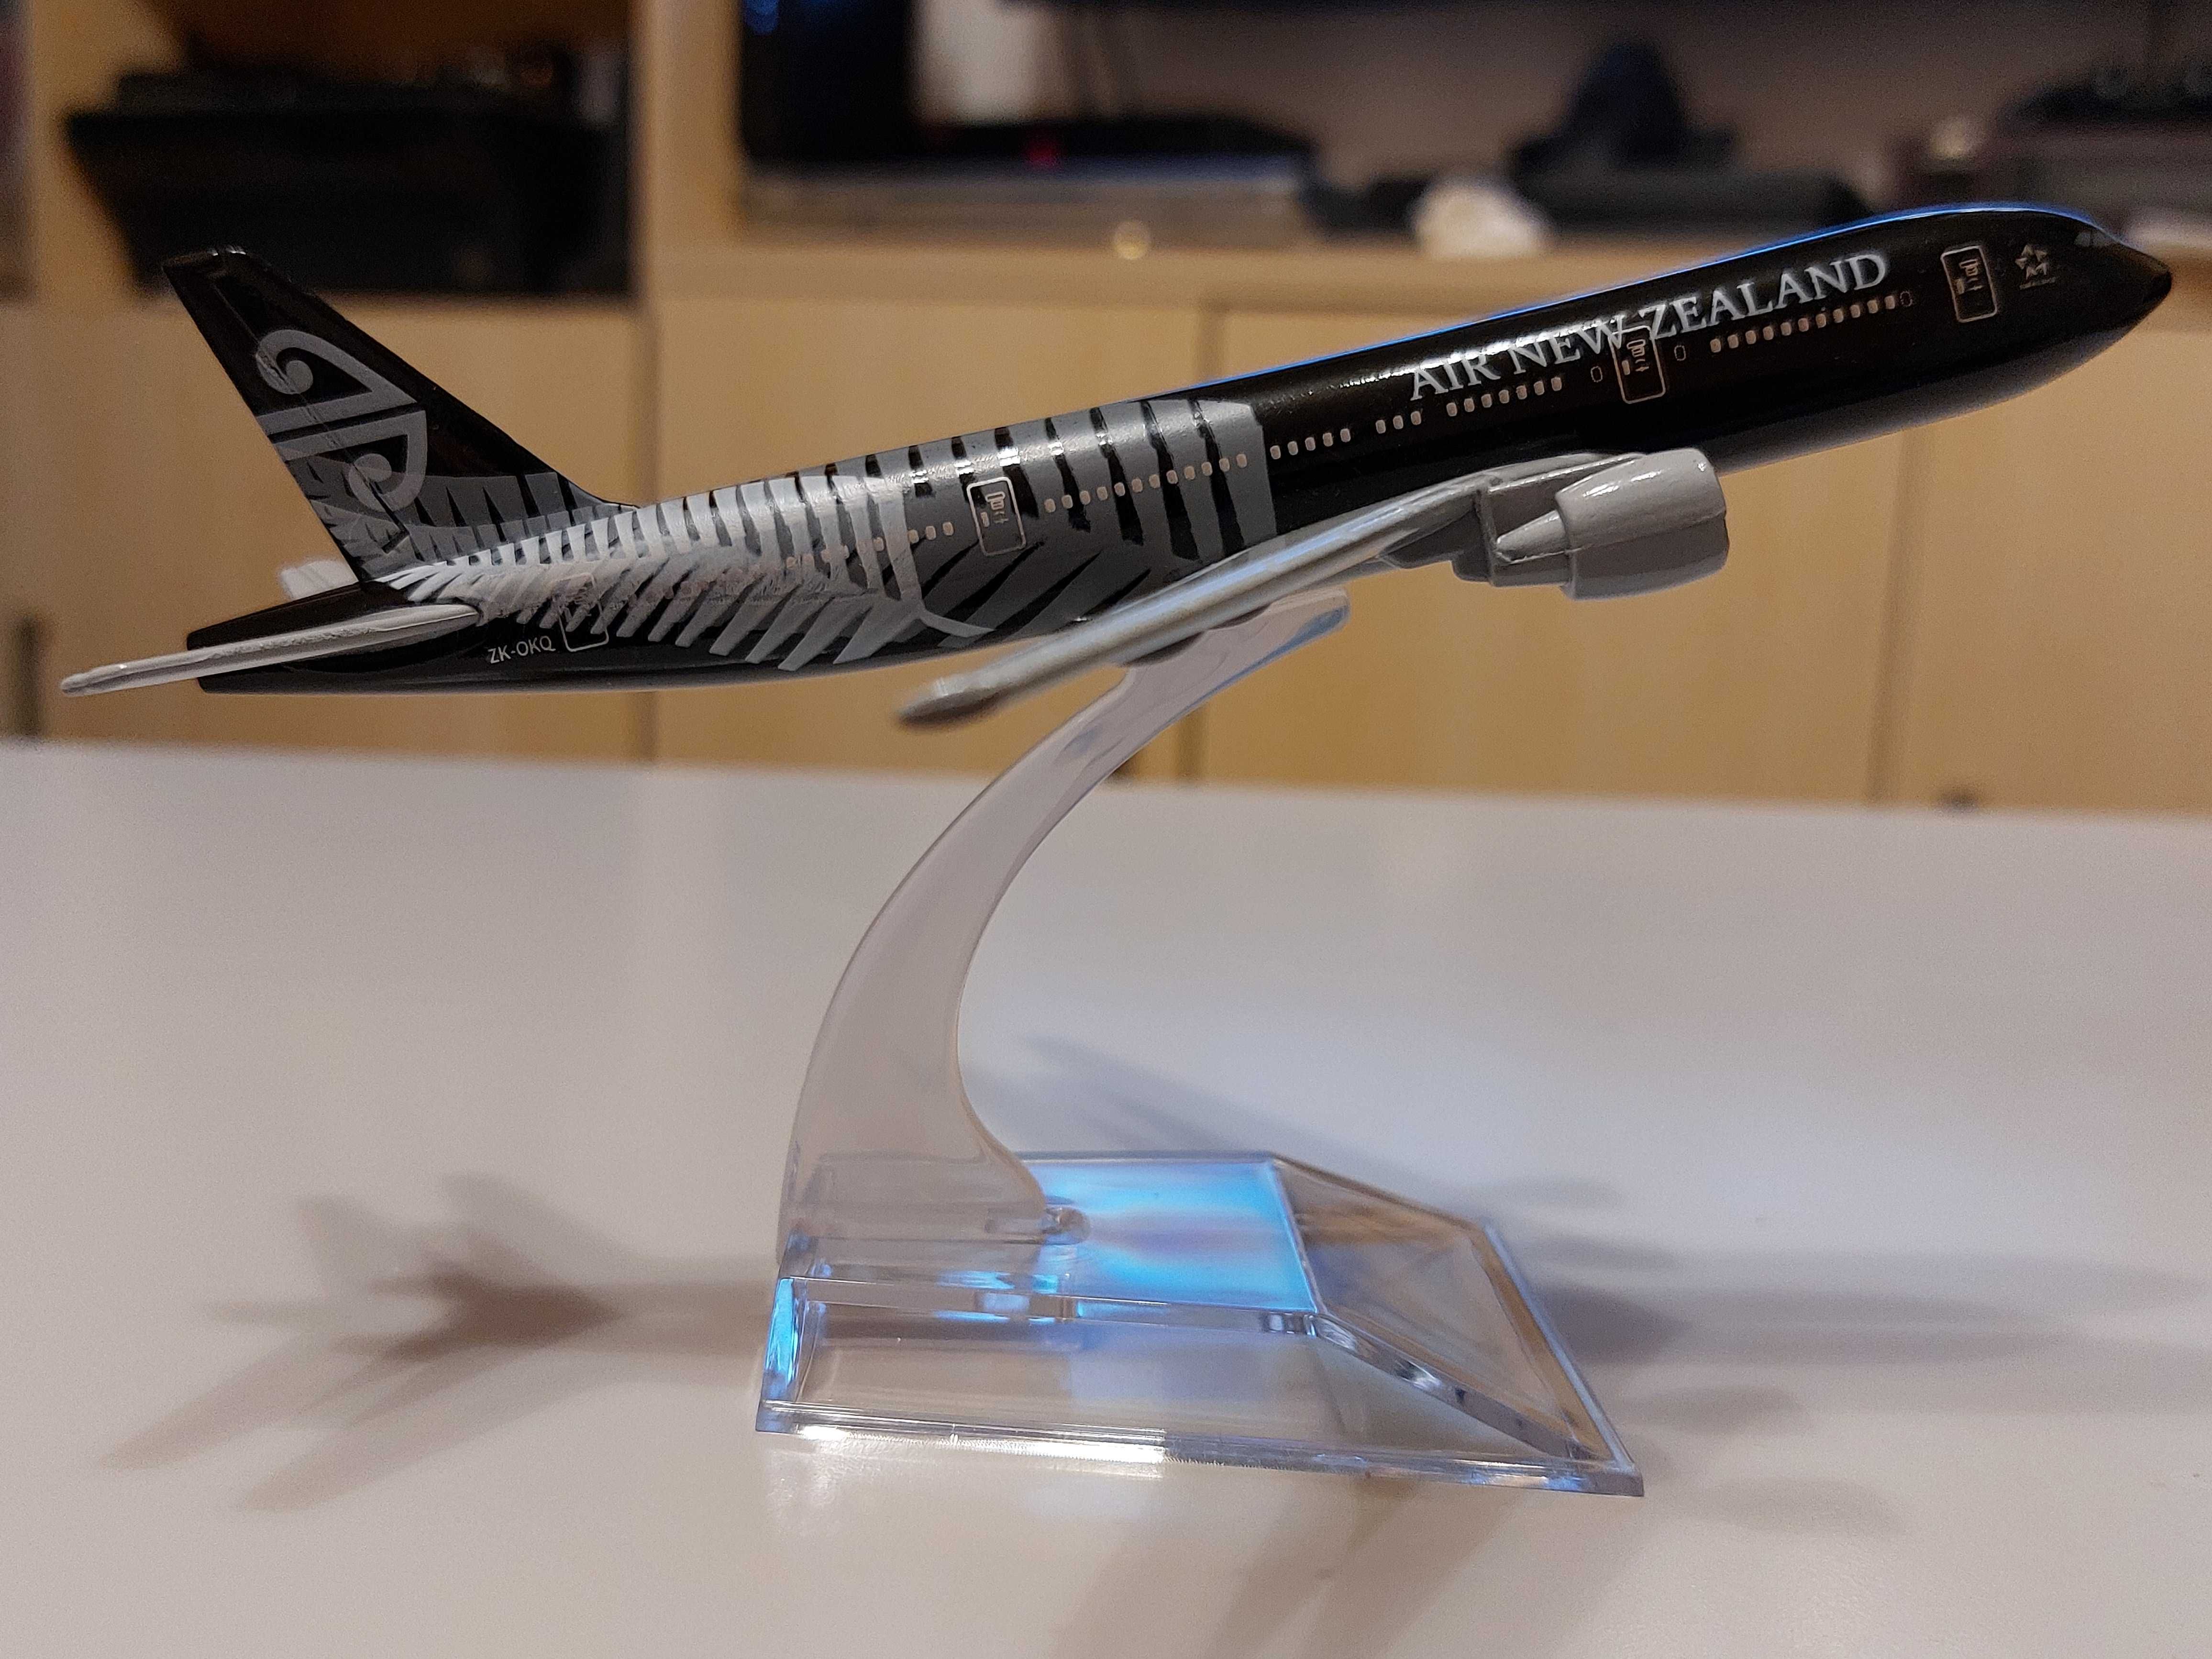 Model samolotu linii Air New Zealand Boeing 777